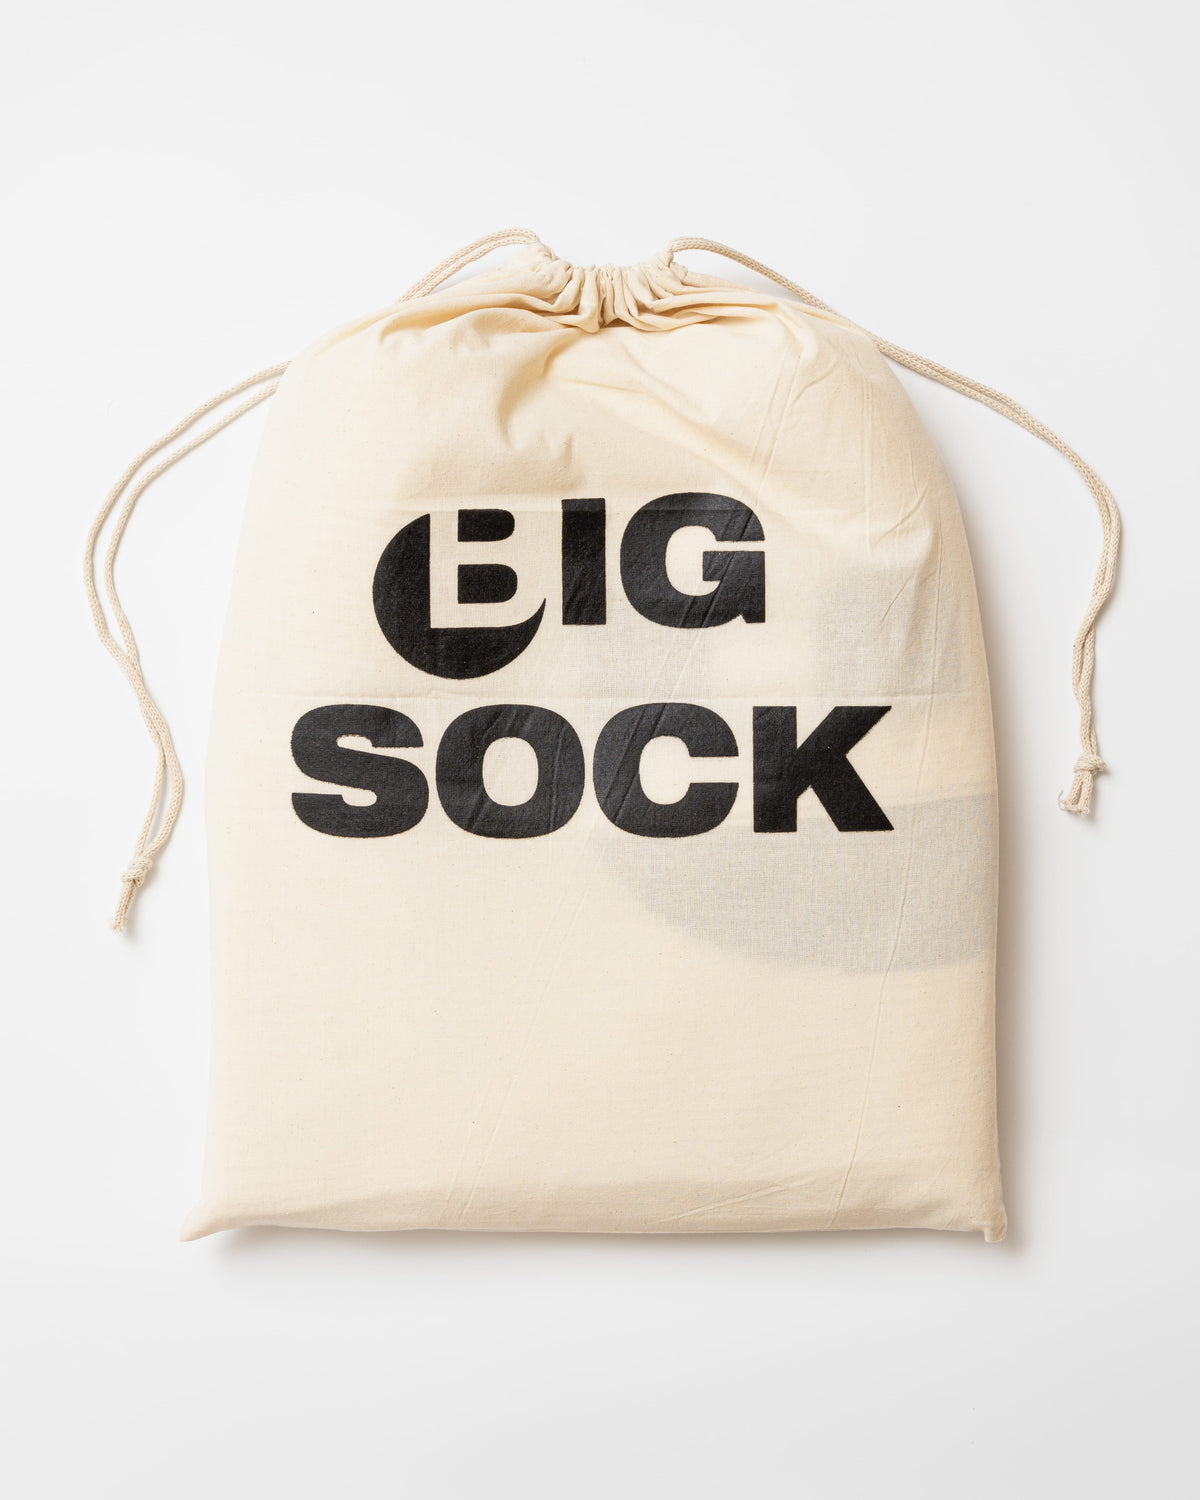 The Big Sock